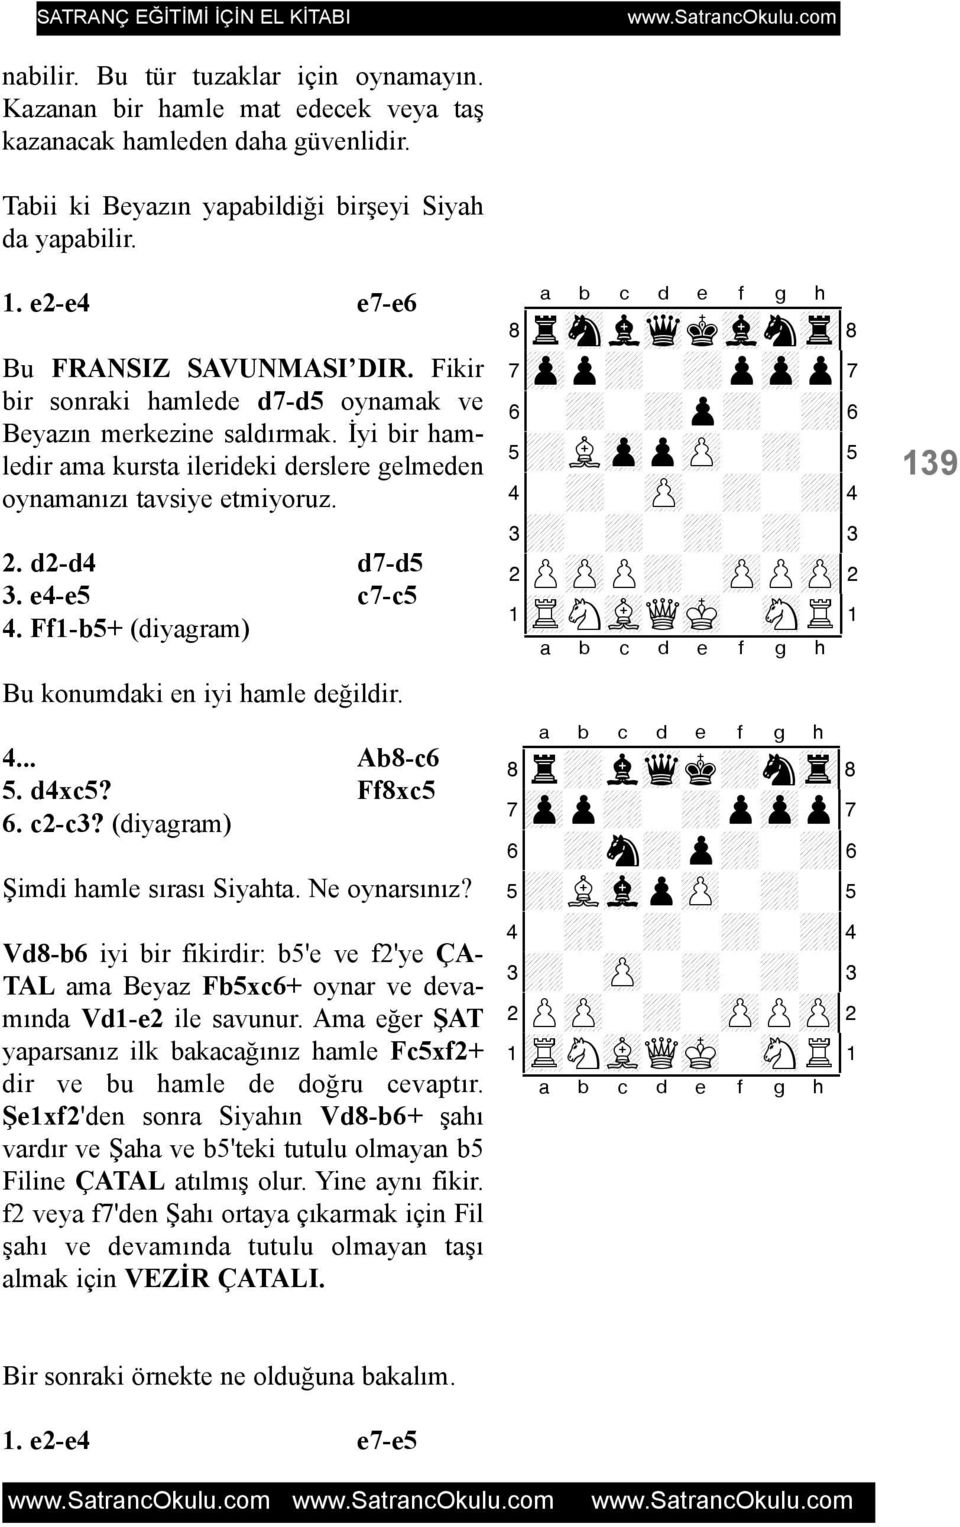 d2-d4 d7-d5 3. e4-e5 c7-c5 4. Ff1-b5+ Bu konumdaki en iyi hamle deðildir. 4... Ab8-c6 5. d4xc5? Ff8xc5 6. c2-c3? Þimdi hamle sýrasý Siyahta. Ne oynarsýnýz?